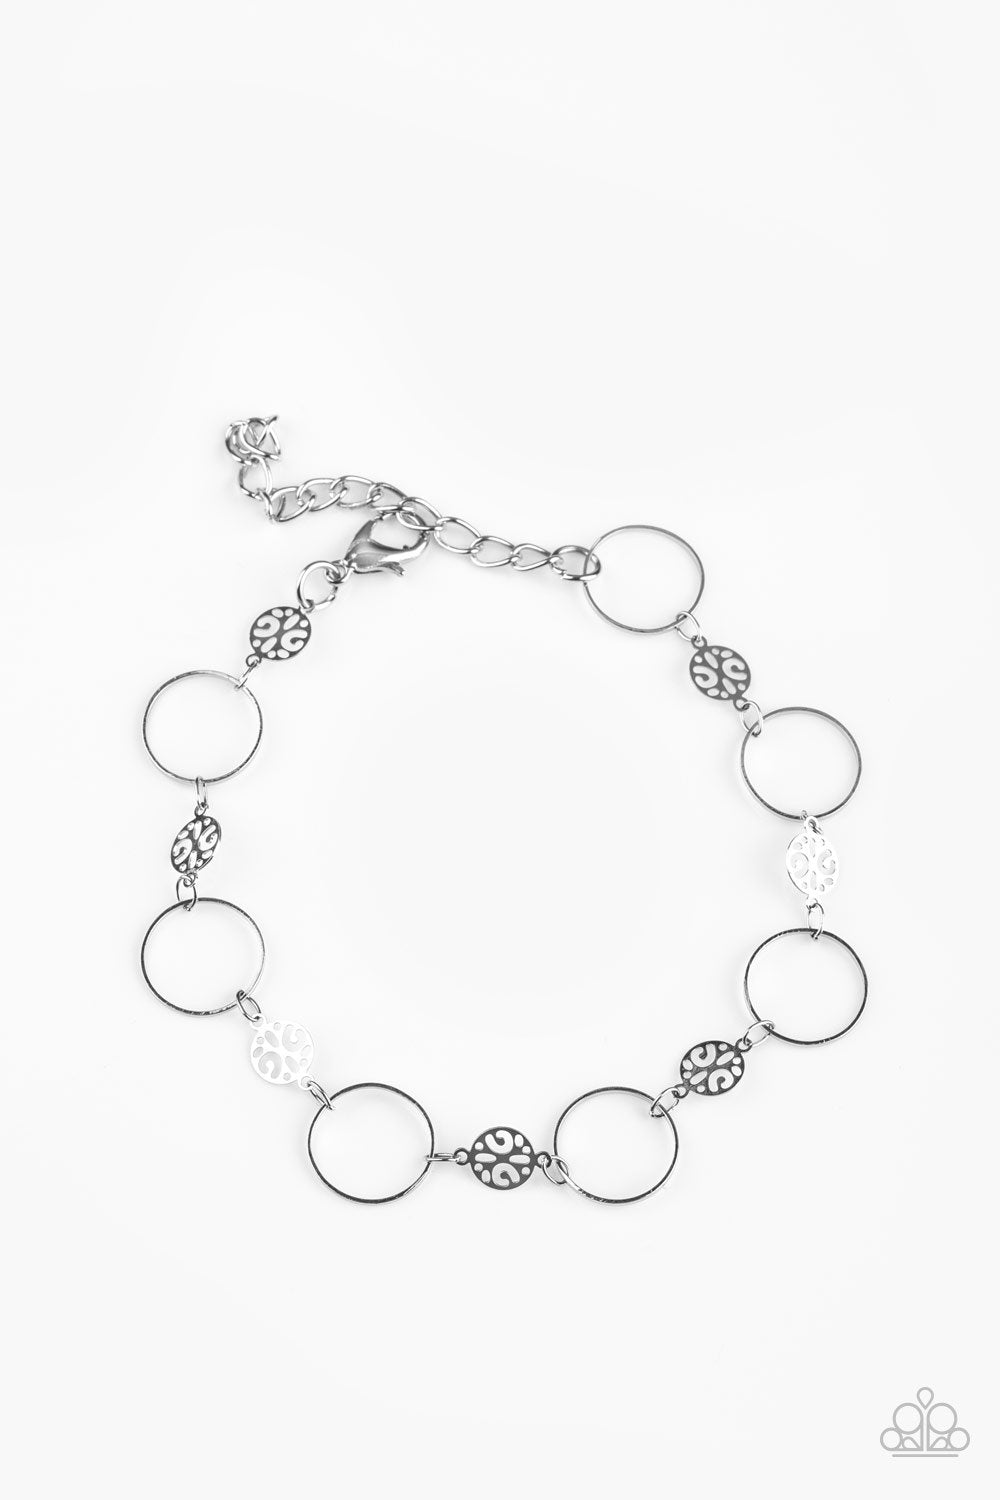 Dainty Delicacy Silver Bracelet - Paparazzi Accessories-CarasShop.com - $5 Jewelry by Cara Jewels